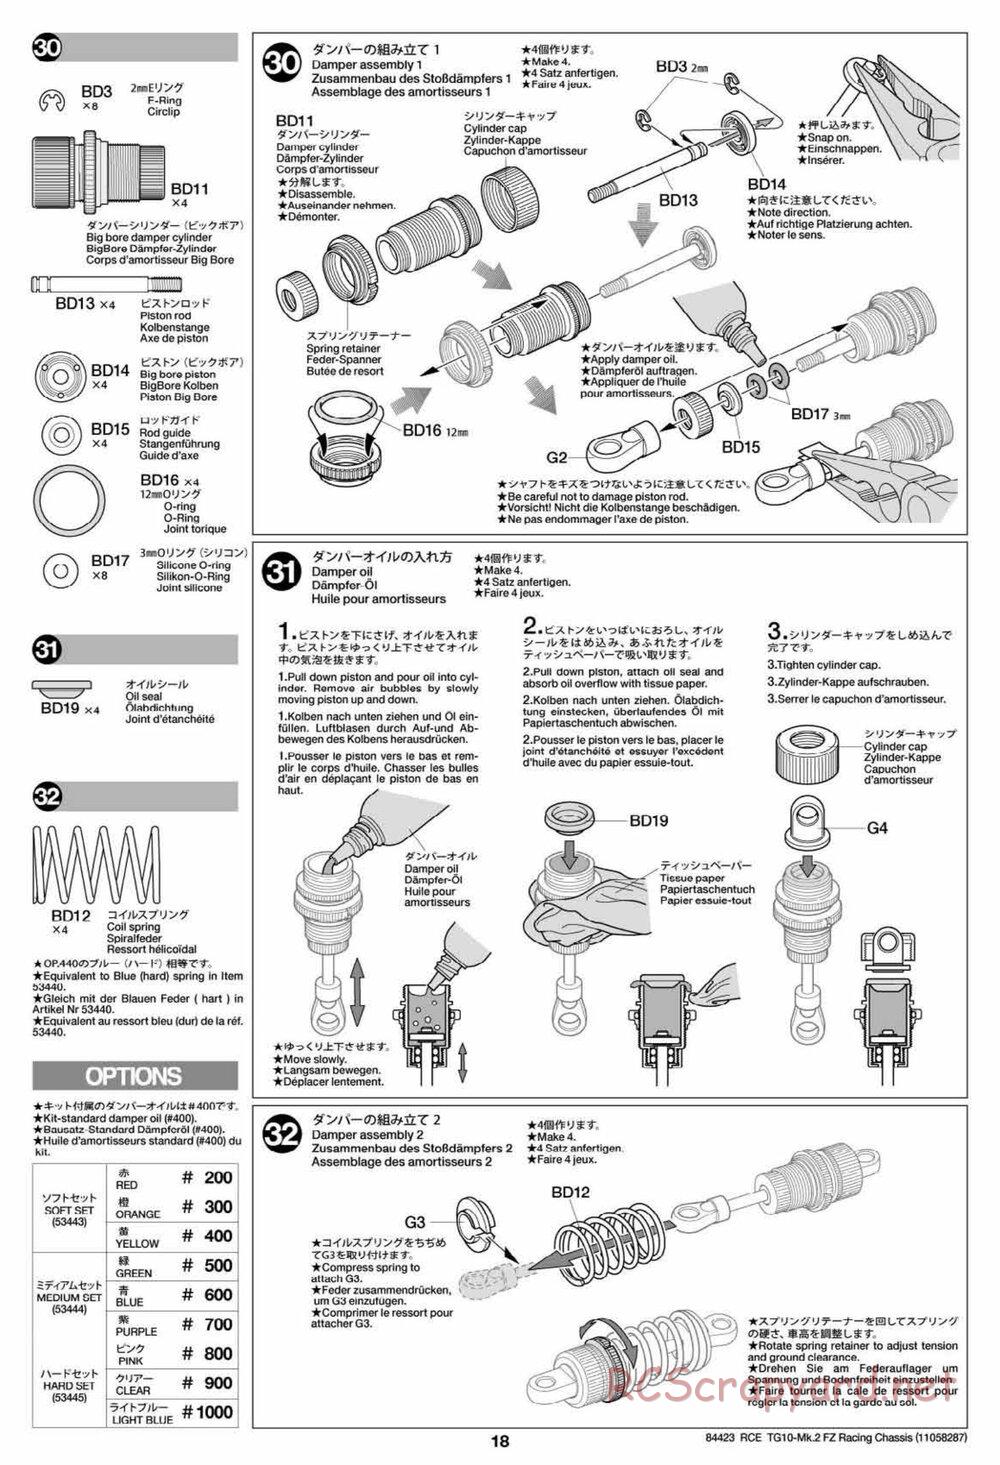 Tamiya - TG10 Mk.2 FZ Racing Chassis - Manual - Page 18